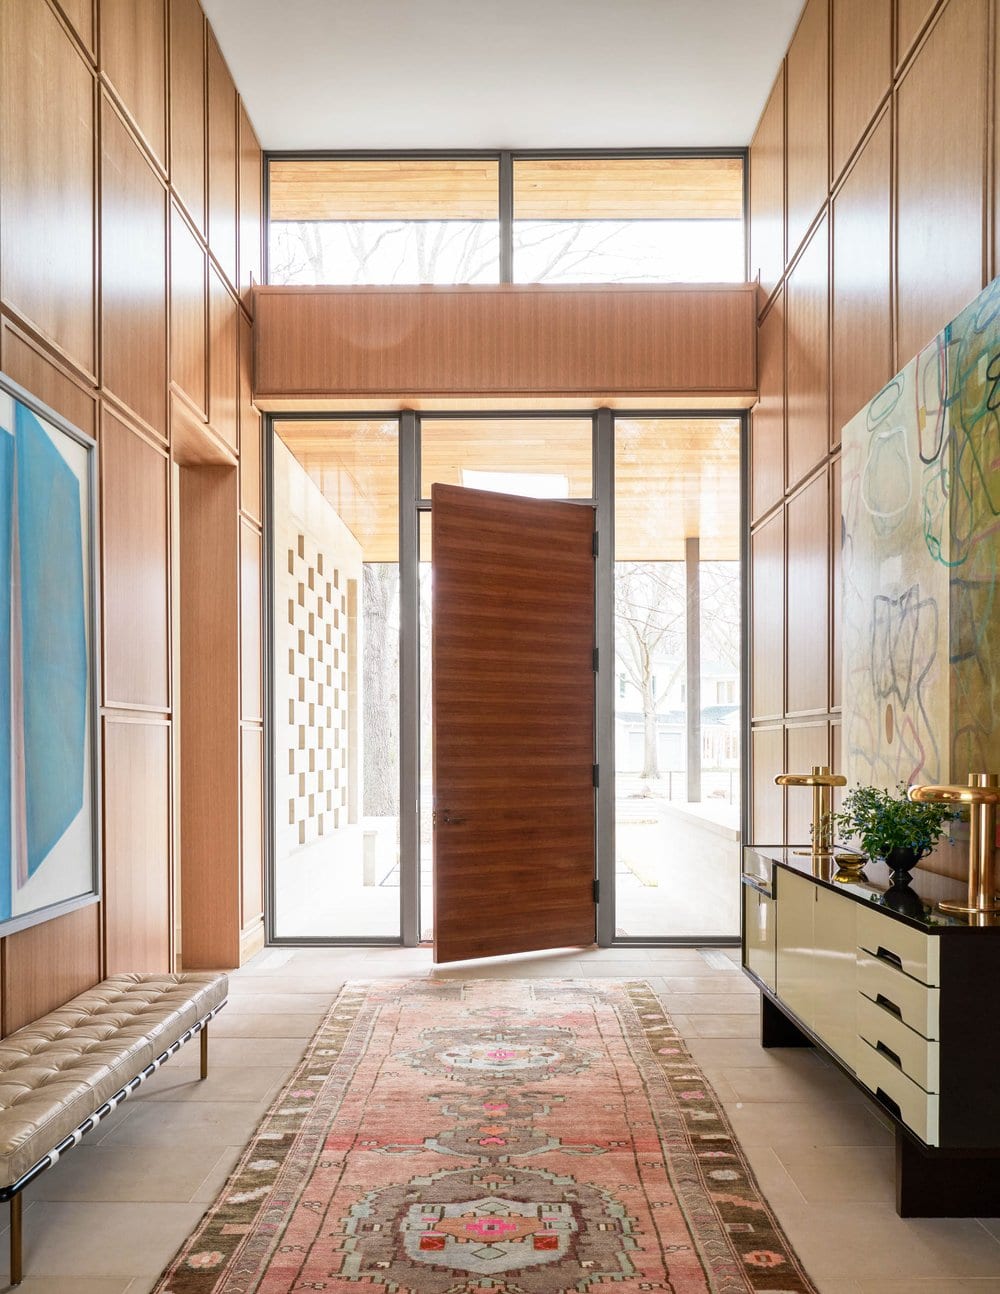 Jenkins Interiors - Nathan Schroder Photographer - entry - welcome - foyer - midcentury modern